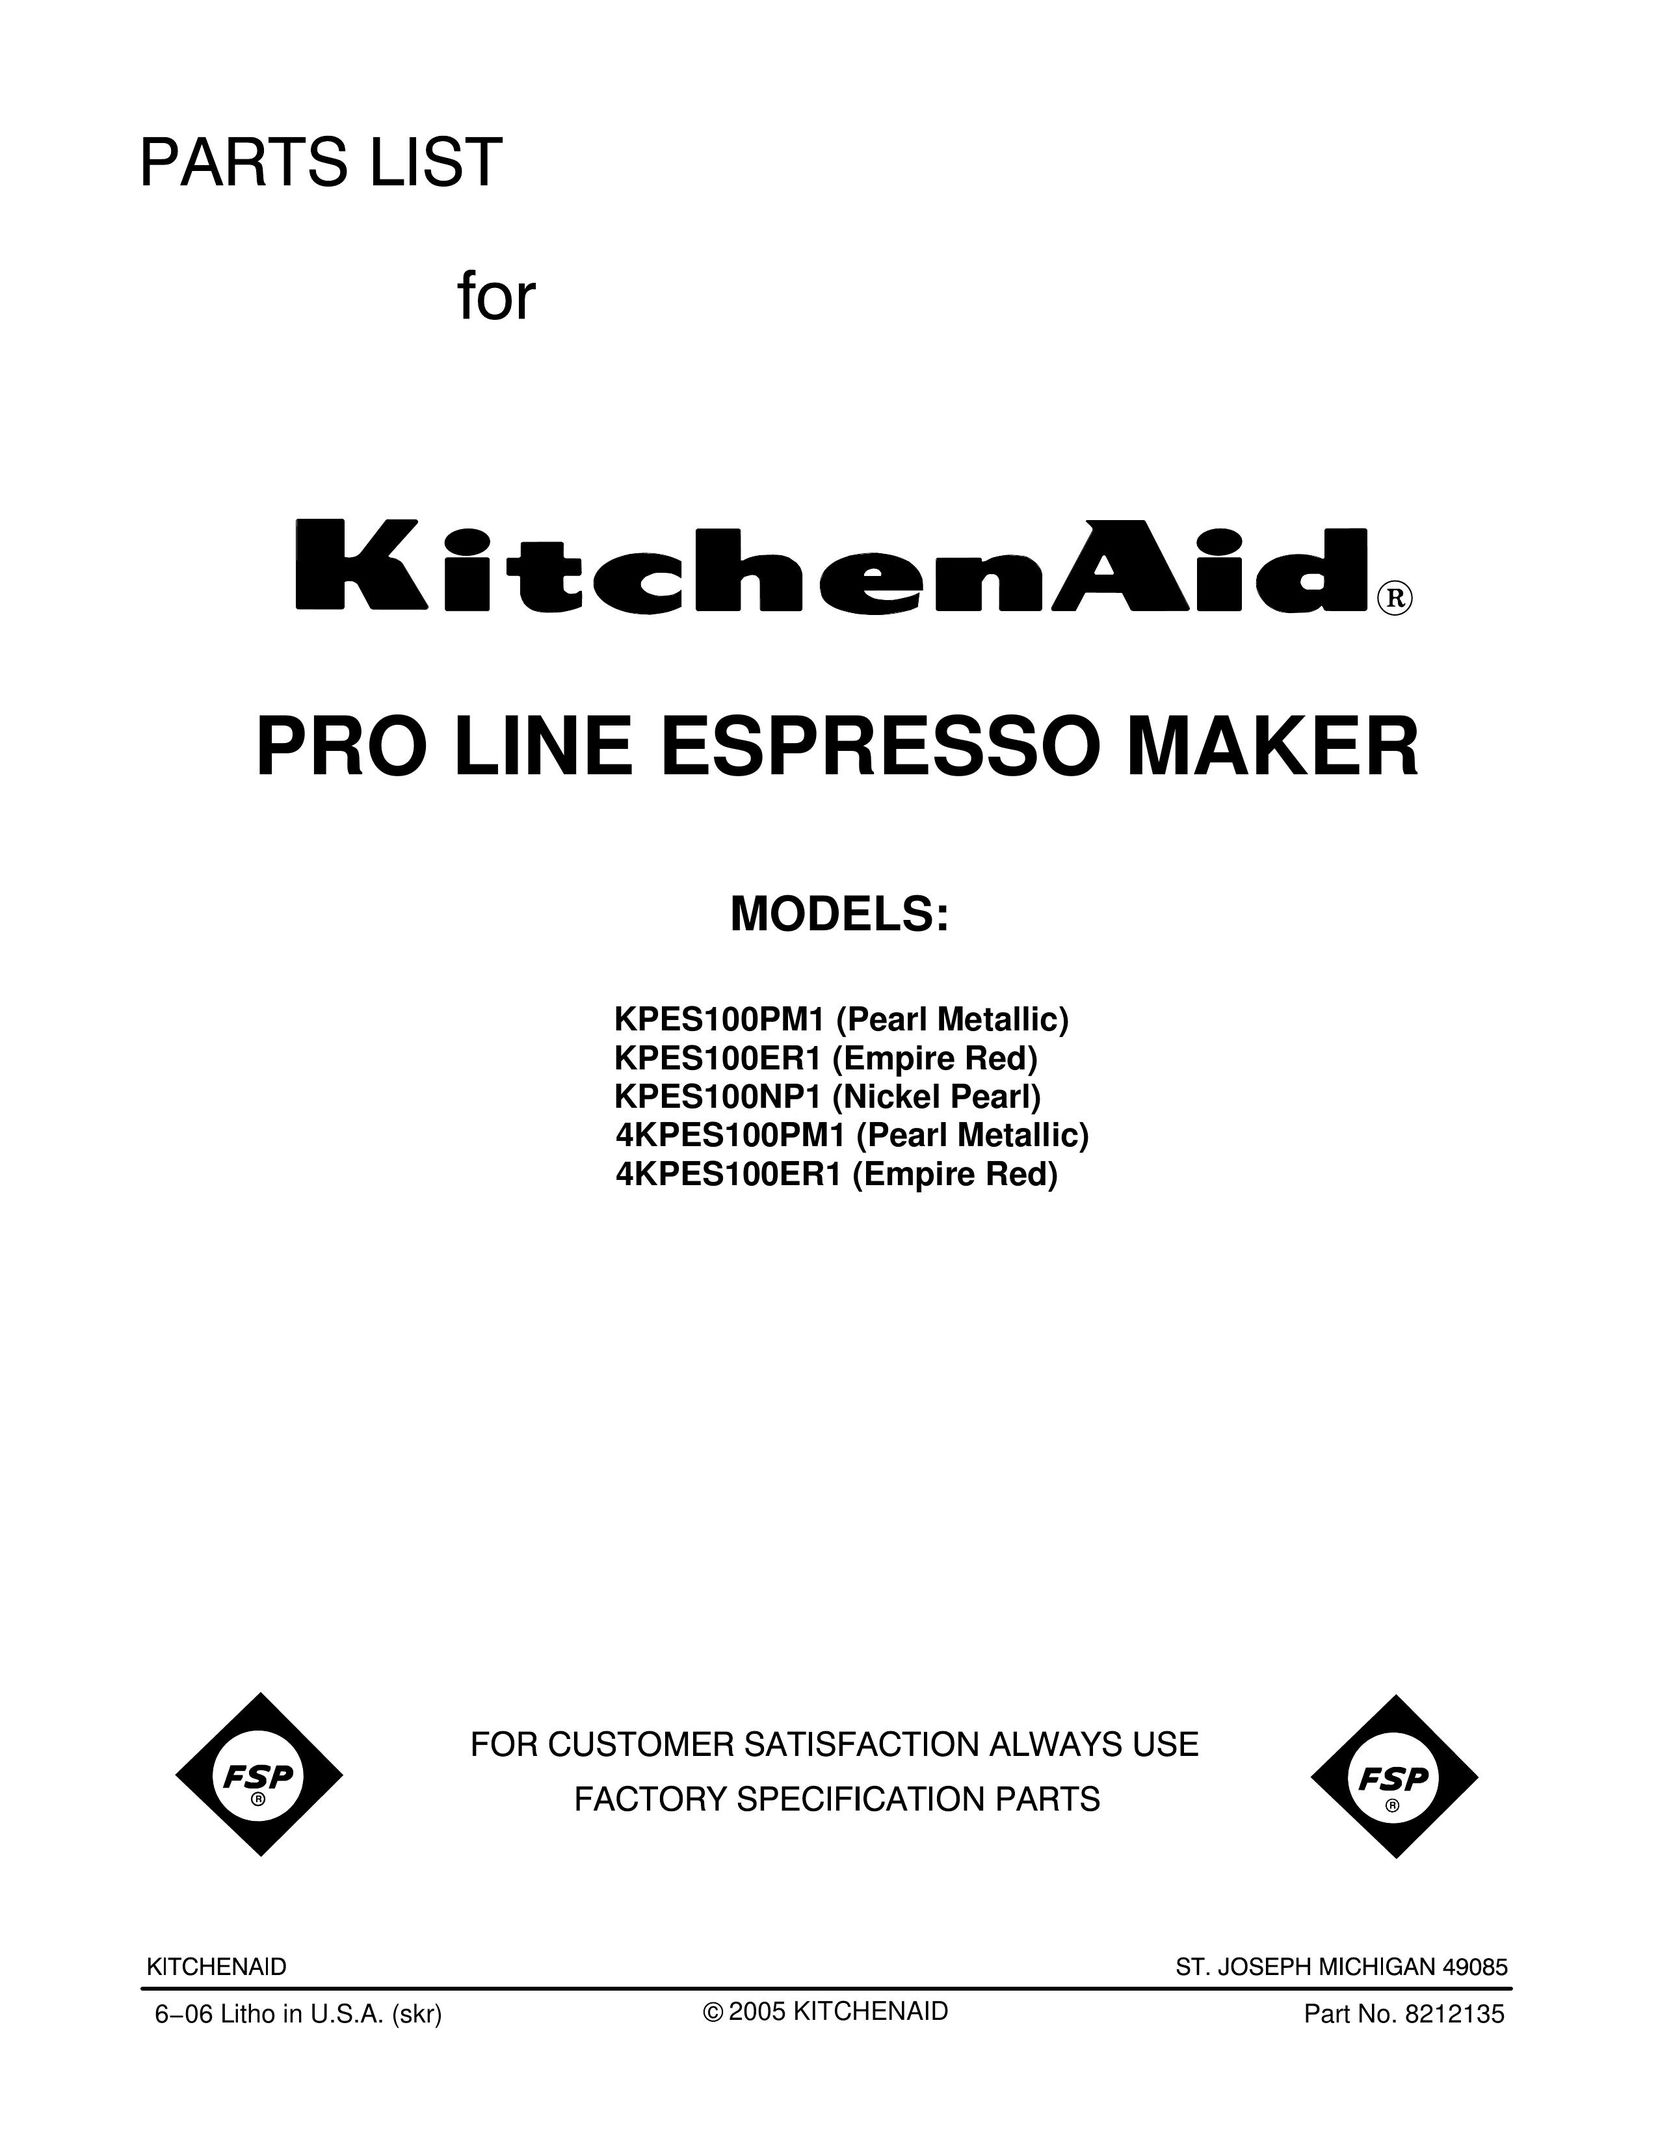 Maytag KPES100NP1 Espresso Maker User Manual